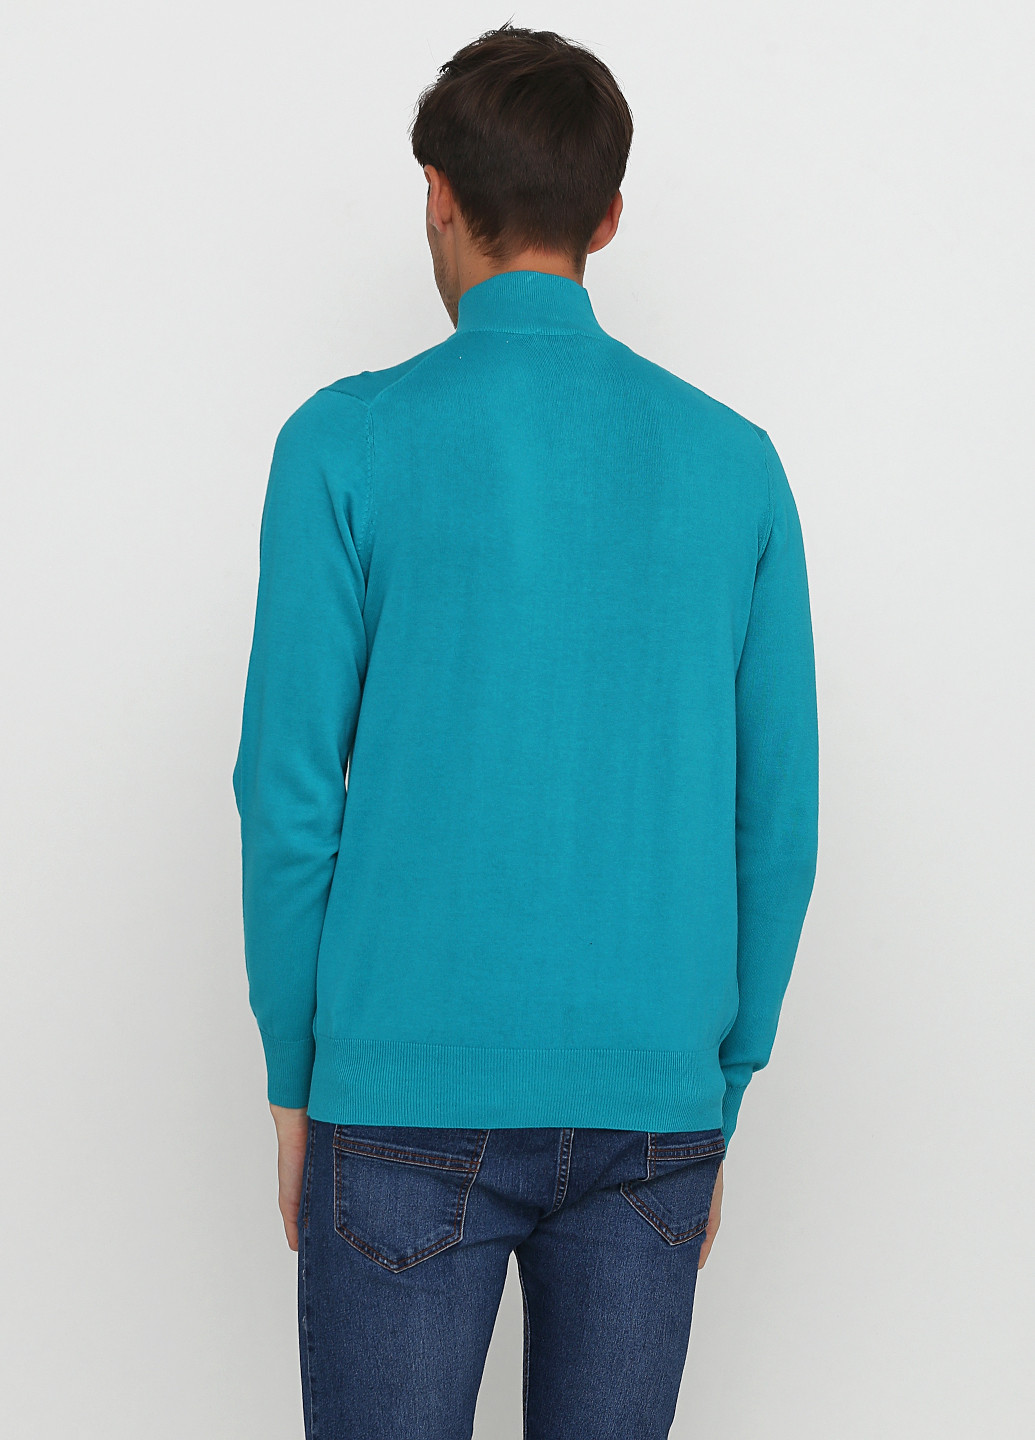 Бирюзовый демисезонный свитер джемпер Cashmere Company